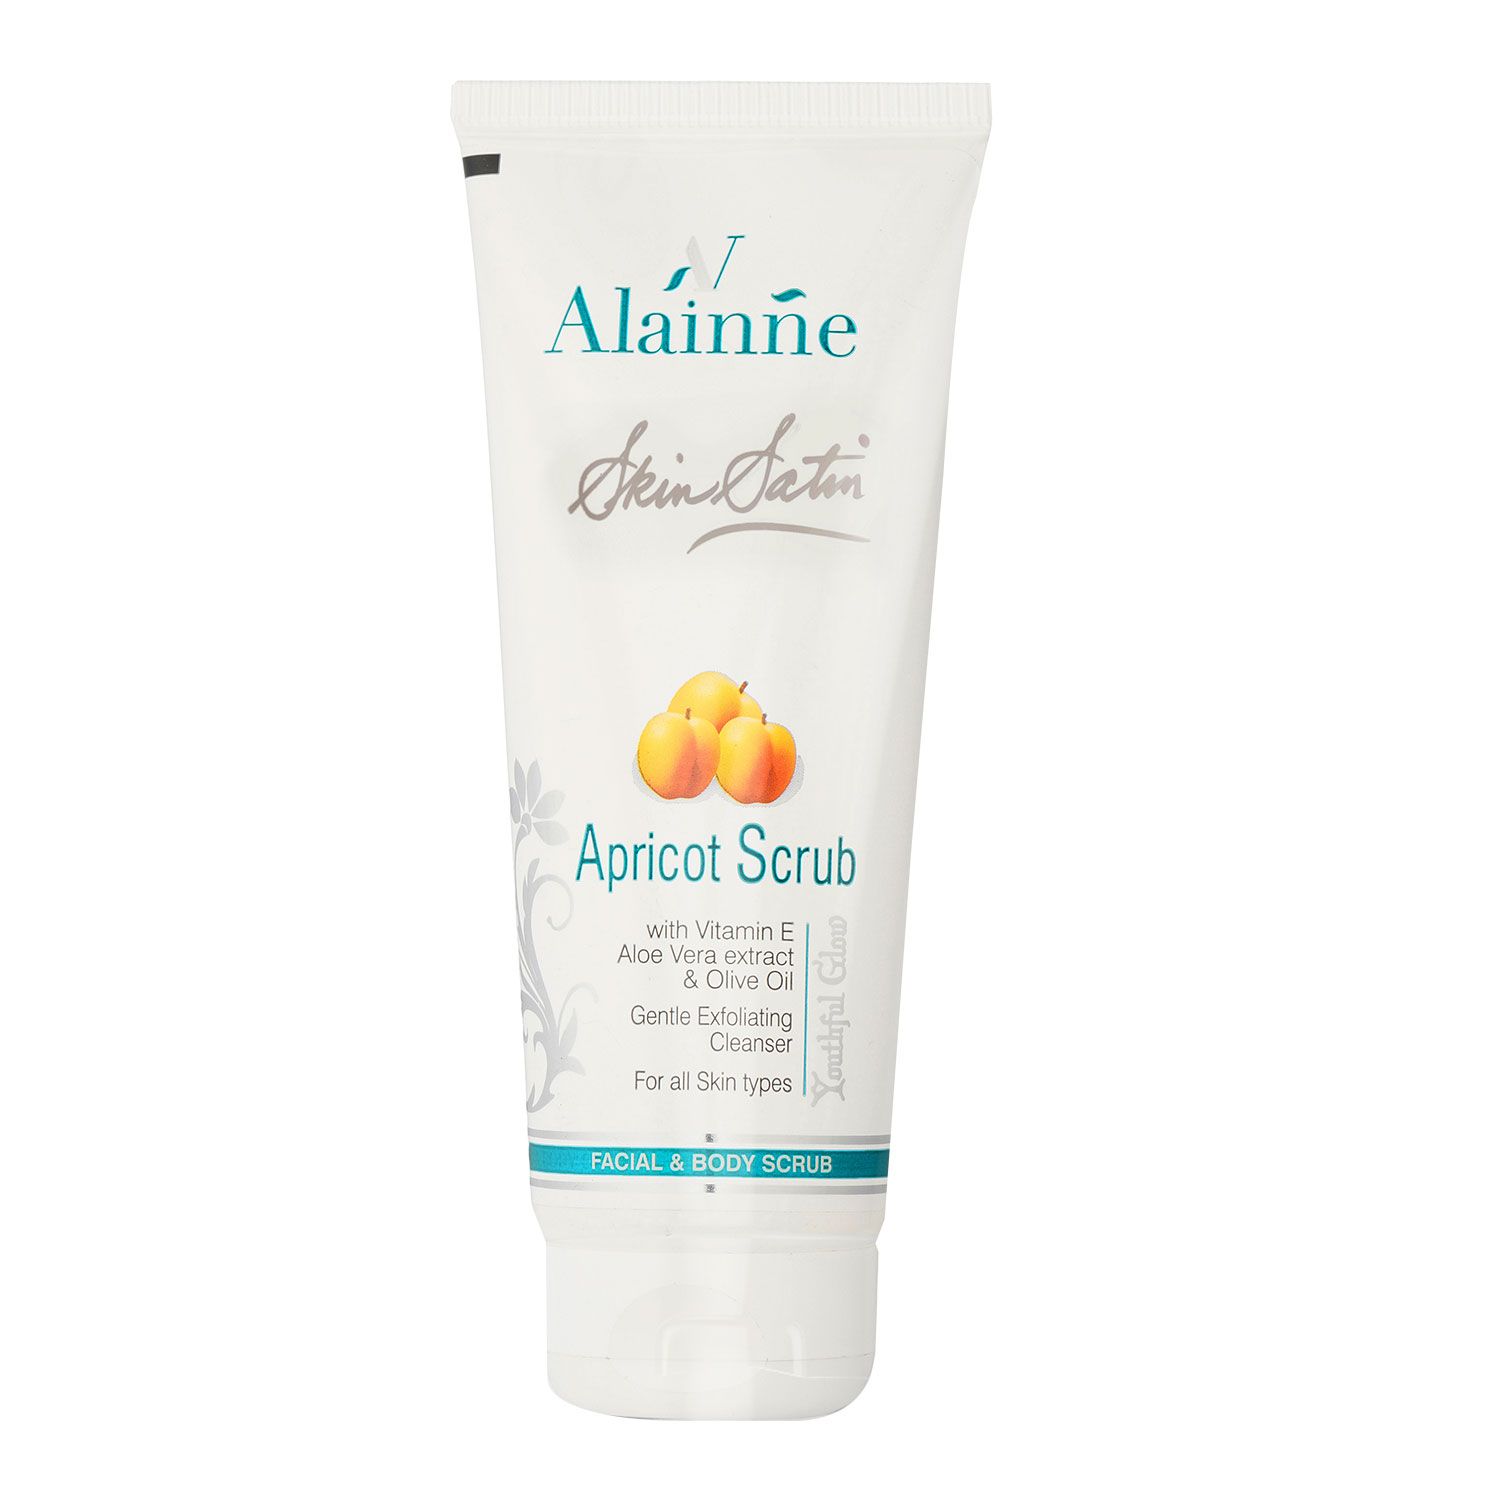 Alainne Skin Satin Apricot Face & Body Scrub 200g